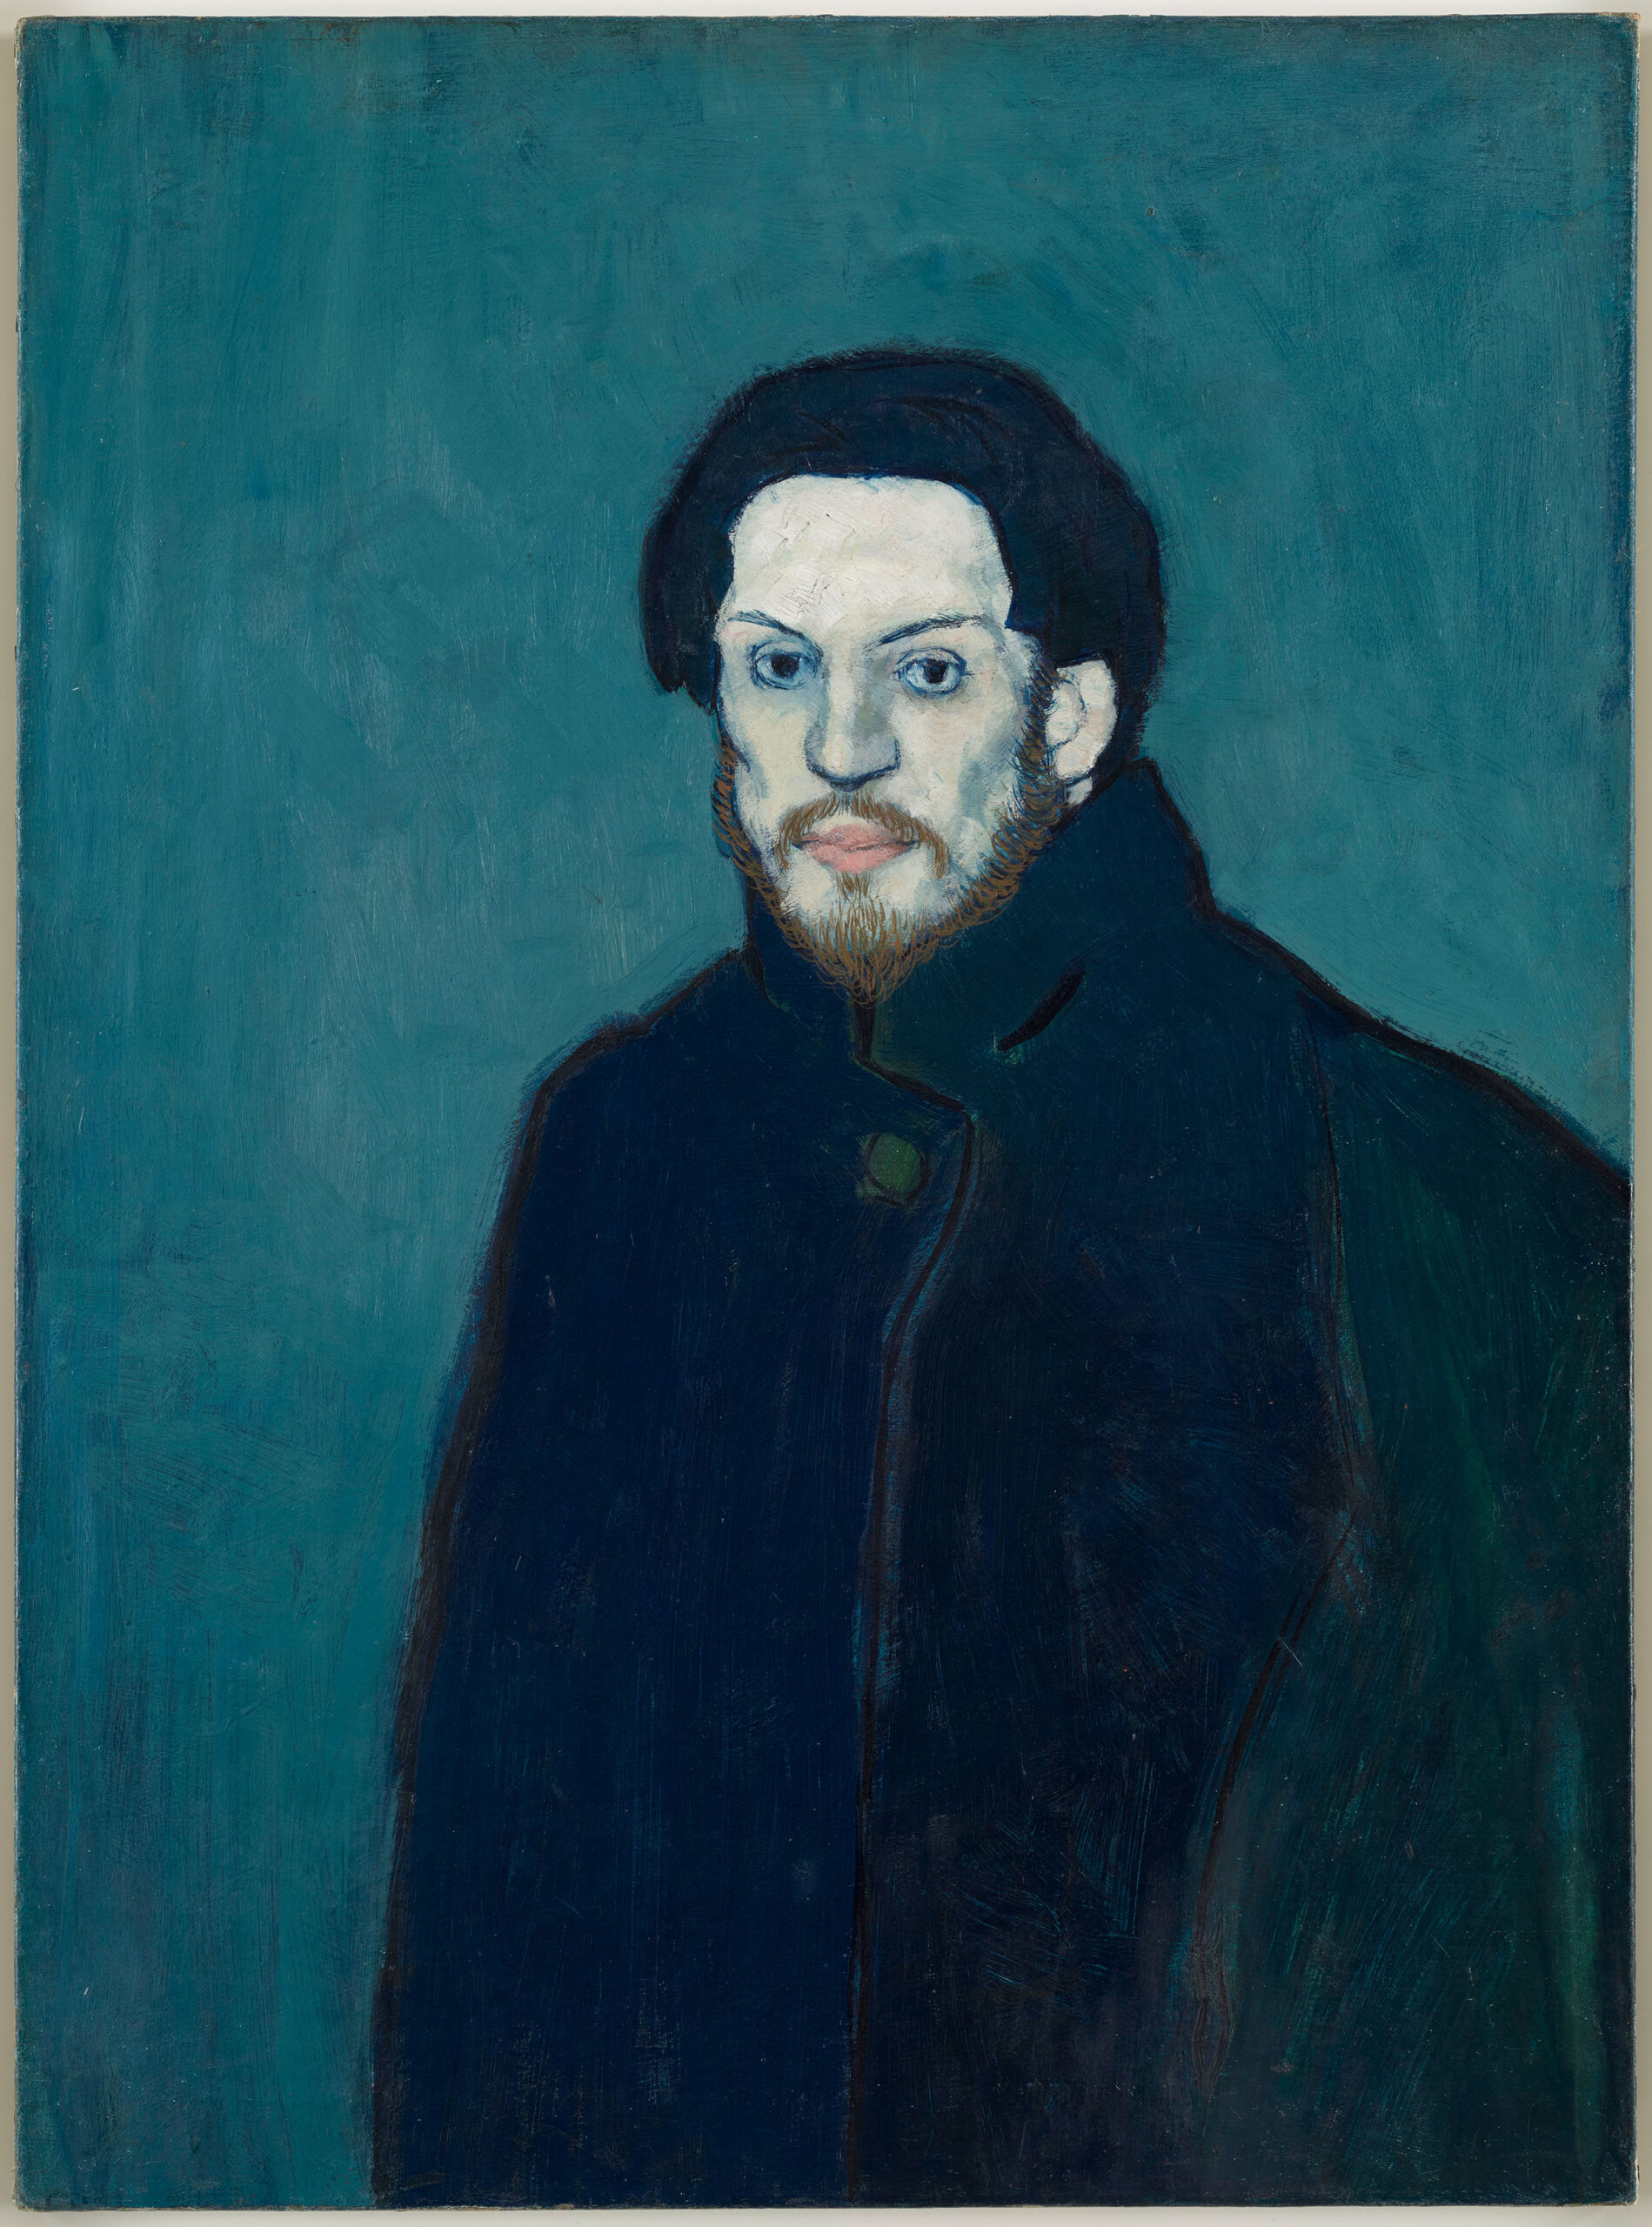 Description of Self-portrait, 1901 | The Guggenheim Museums and Foundation